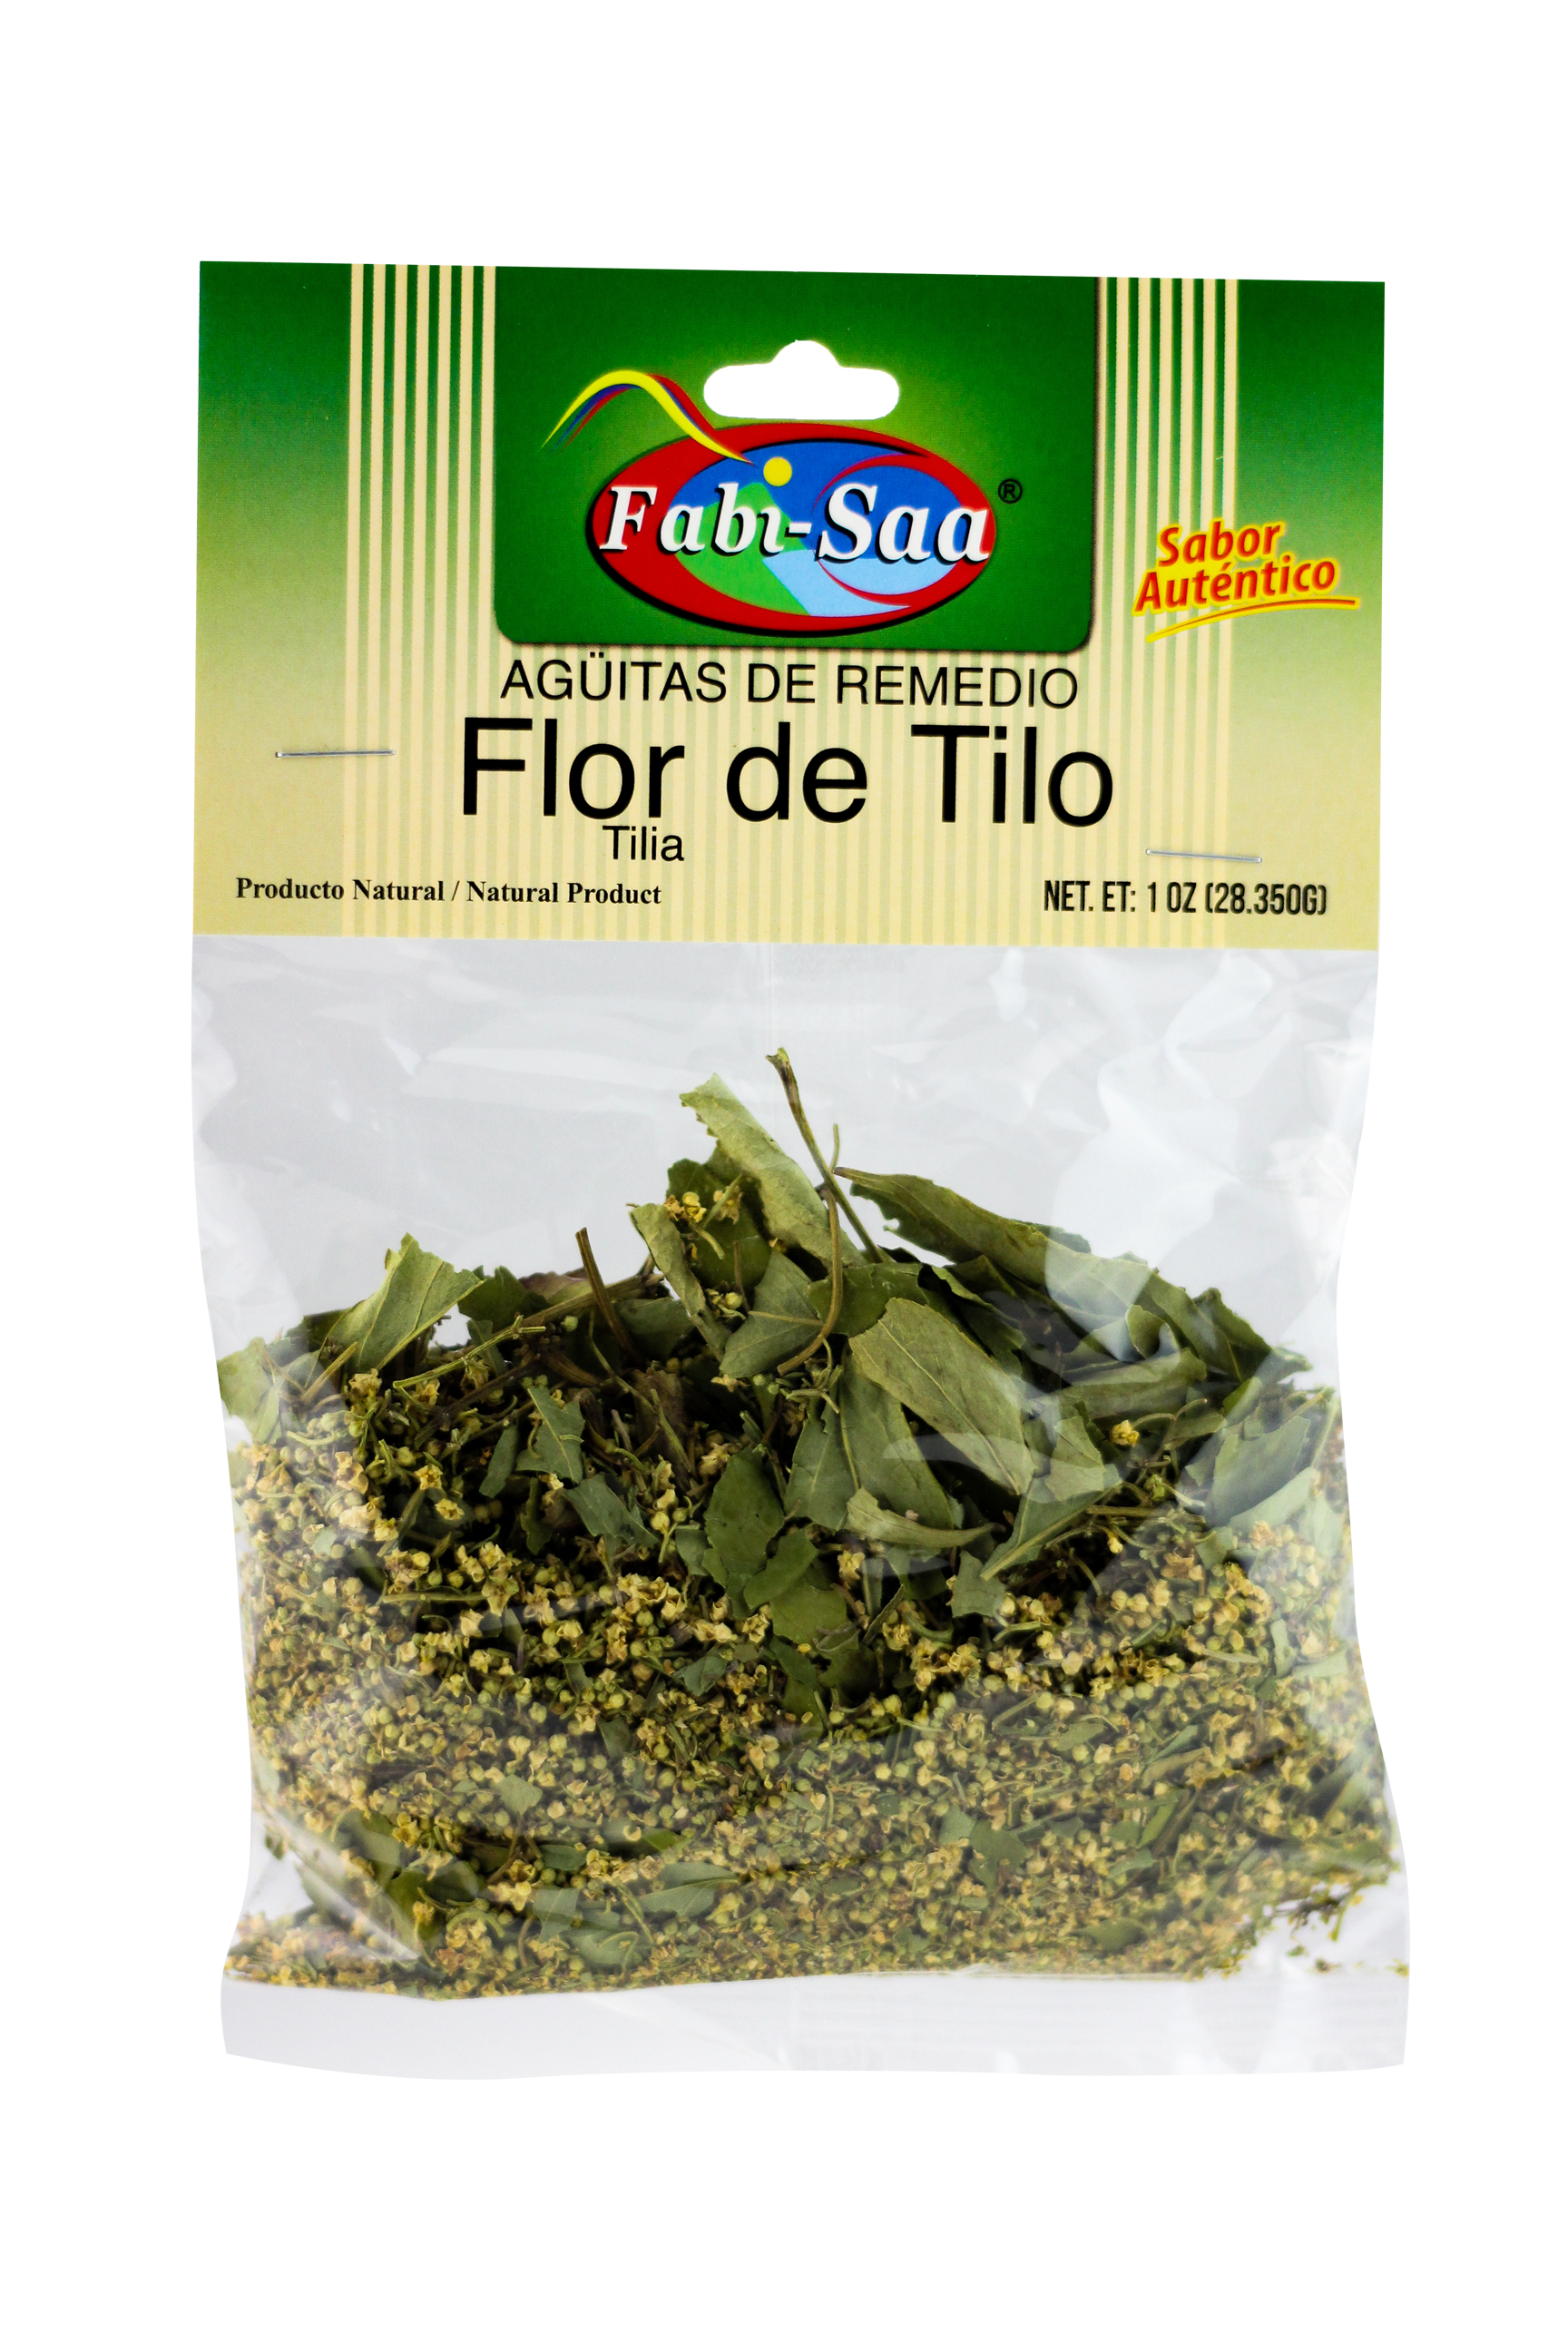 Agüitas de Remedio Flor de Tilo -1oz-Fabi Saa Online Sales LLC